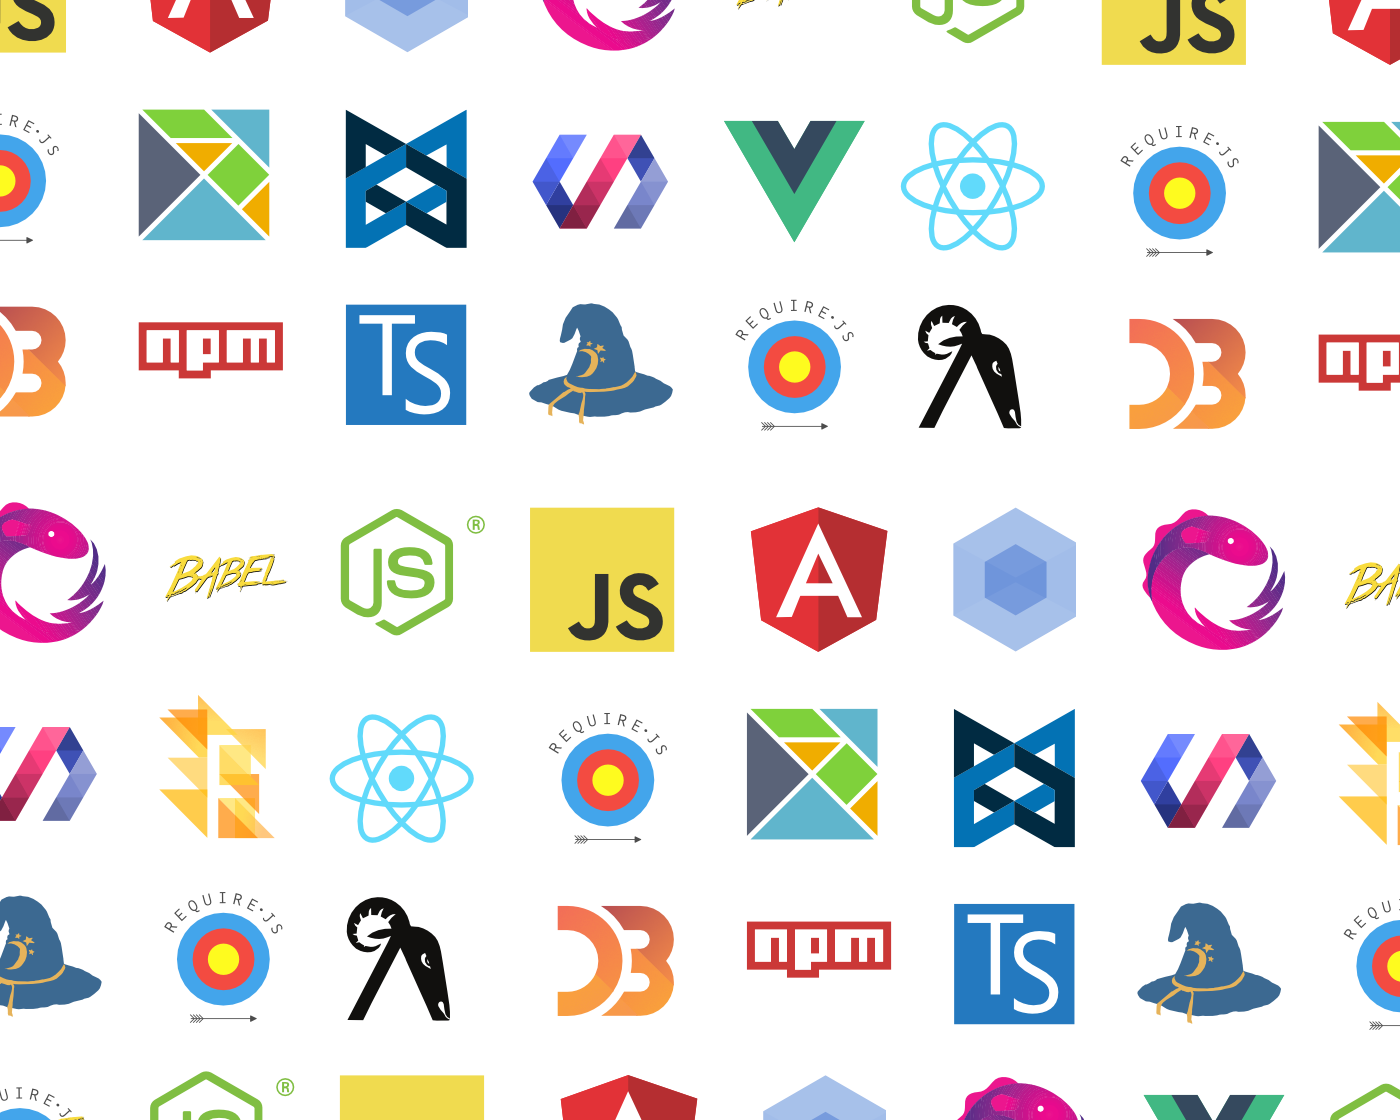 JavaScript Frameworks in 2016